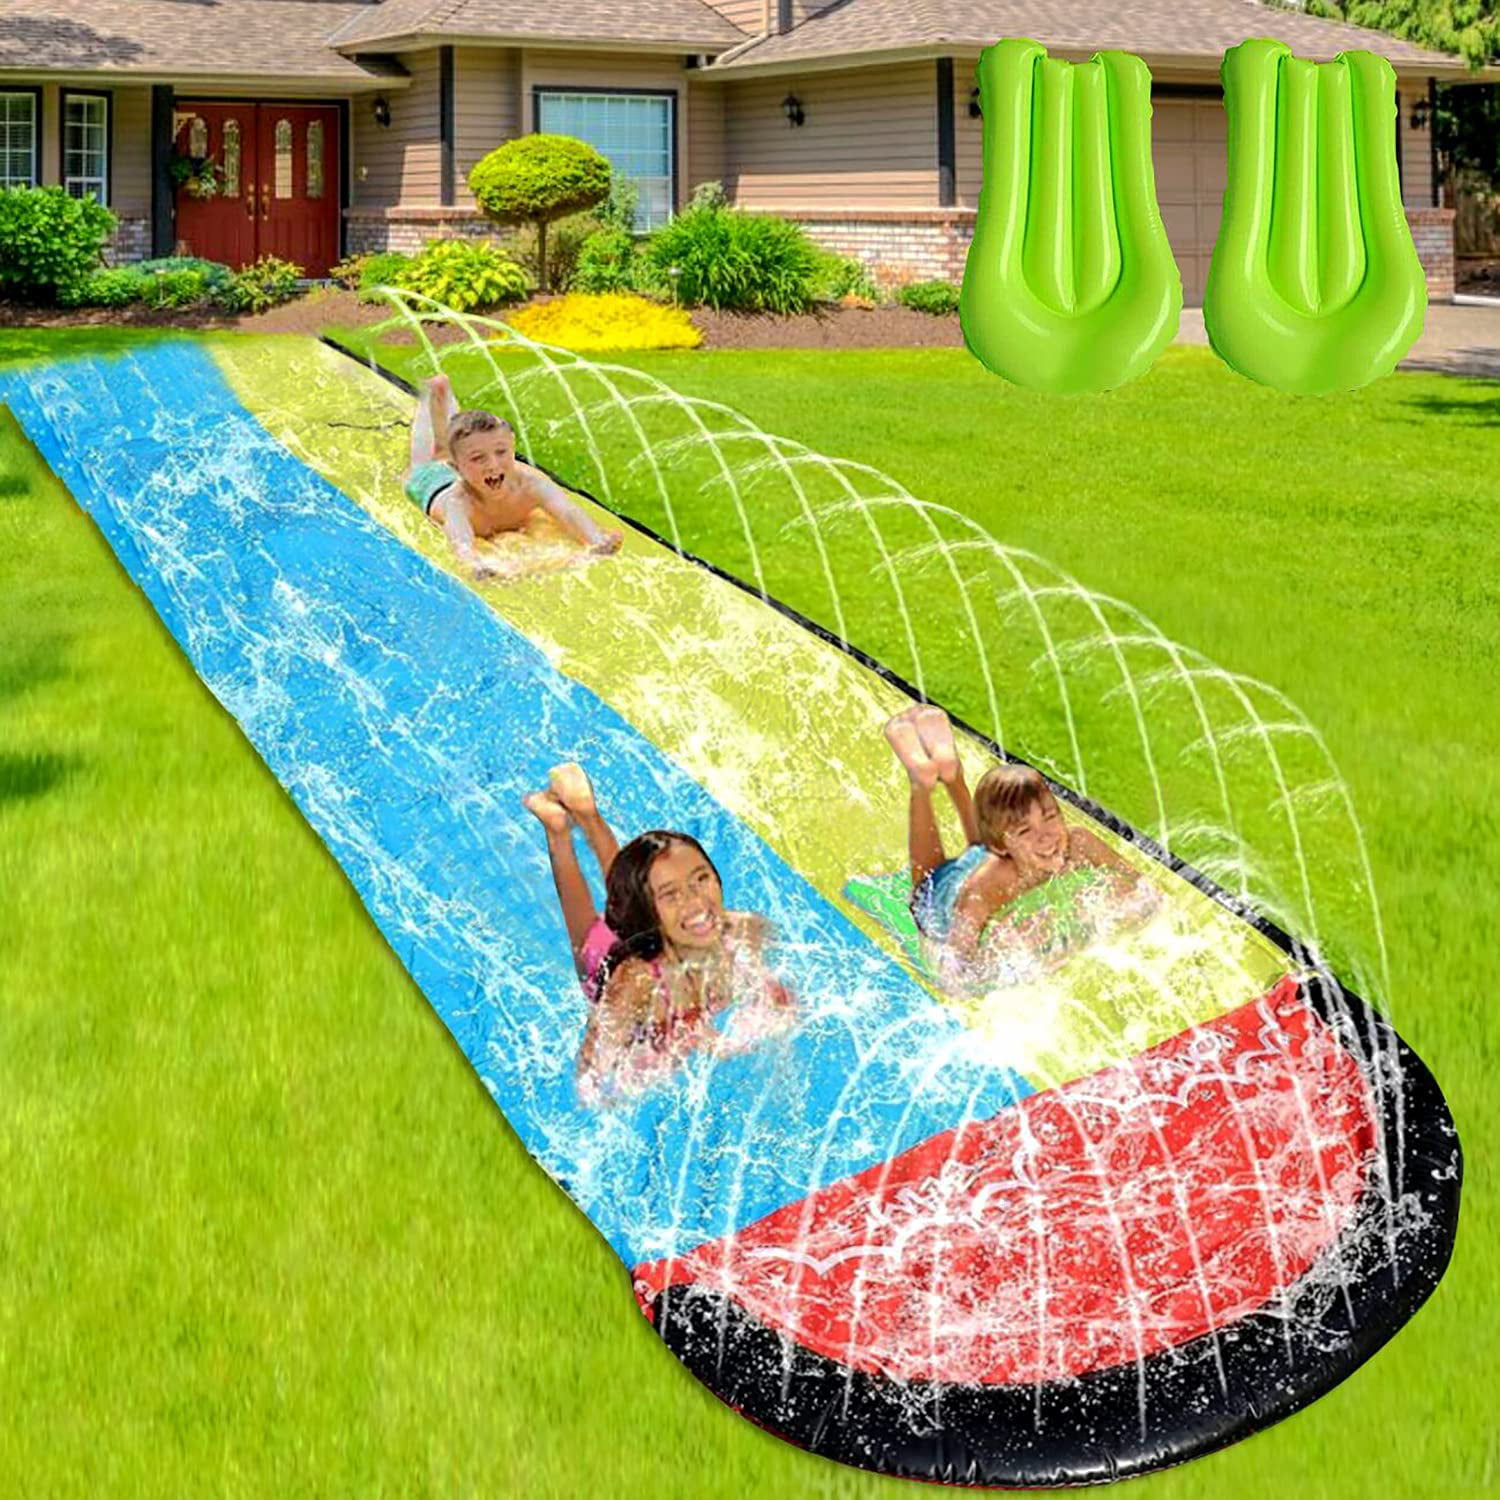 big pools with slides